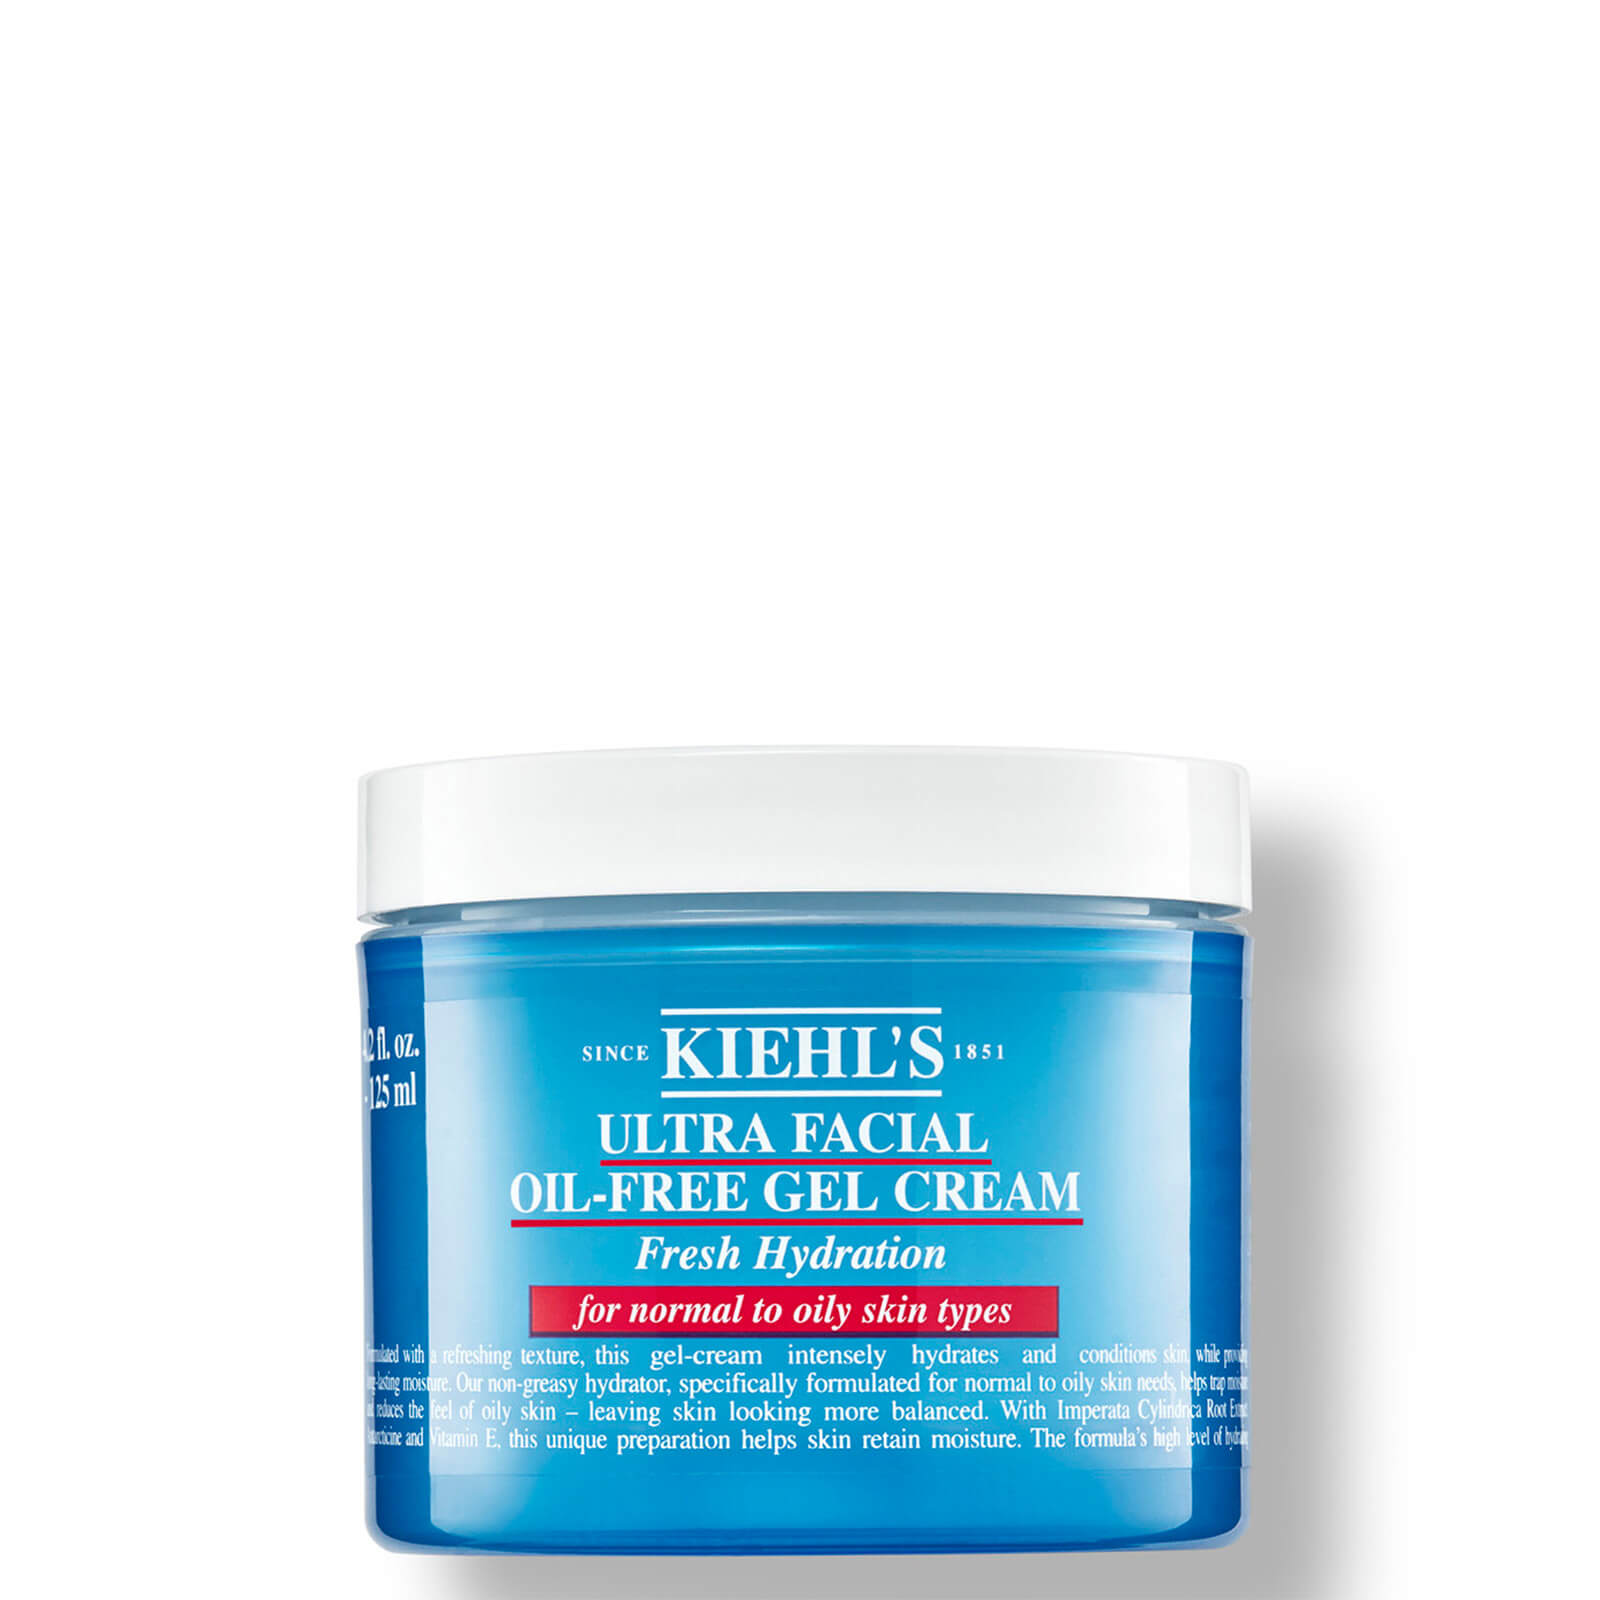 Image of Gel-Crema Oil-free Ultra Facial Kiehl's (vari formati) - 125ml